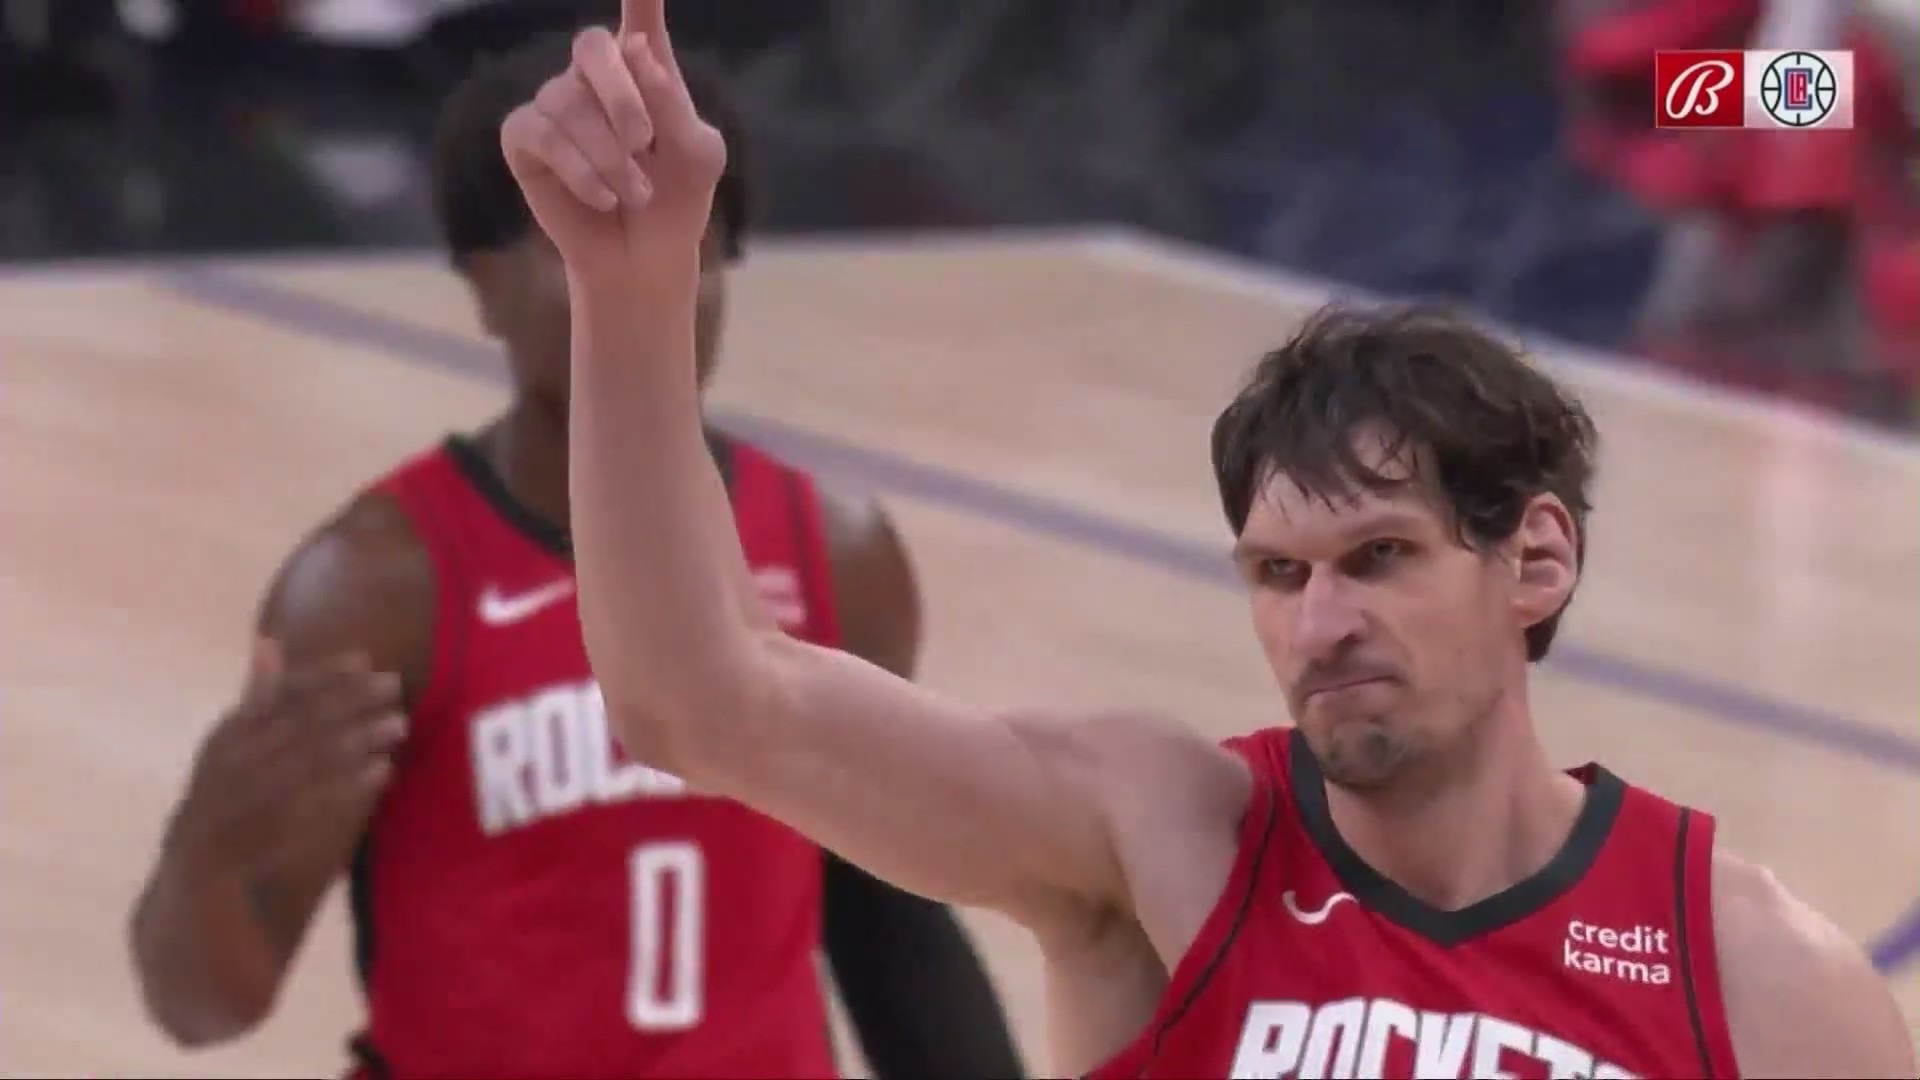 Boban Marjanović saluting Clippers fans